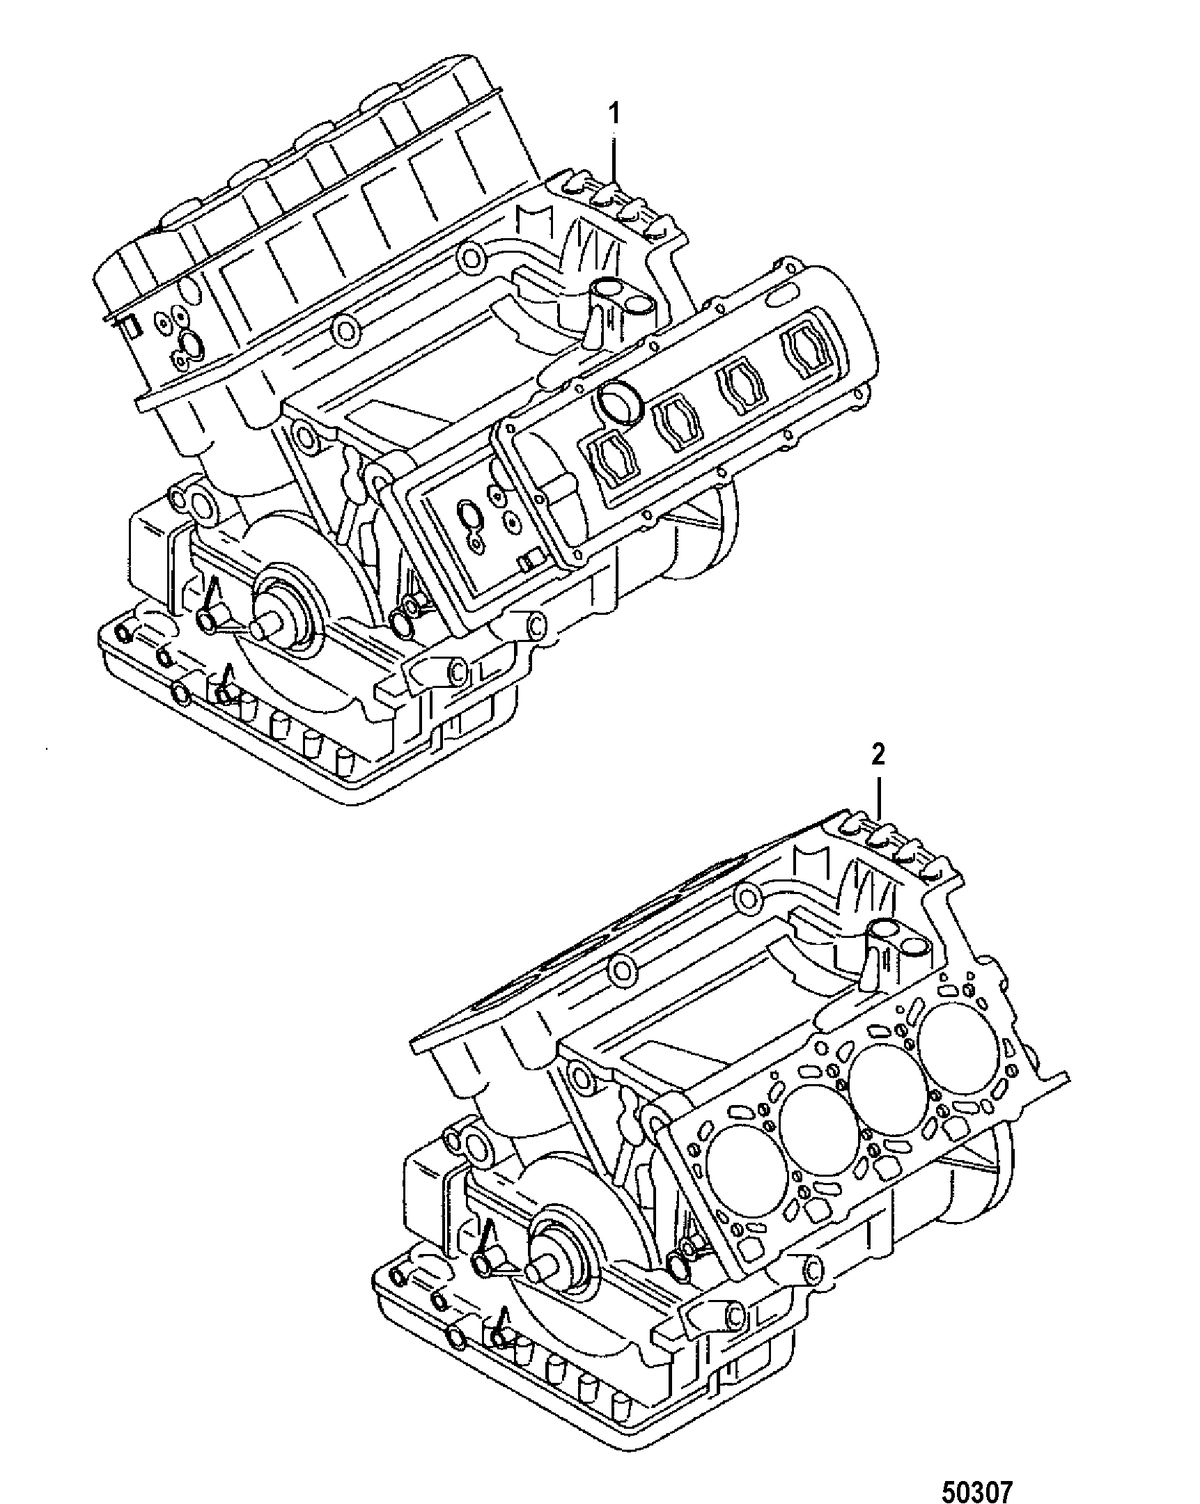 MERCRUISER VW TDI 4.2L BASE ENGINE